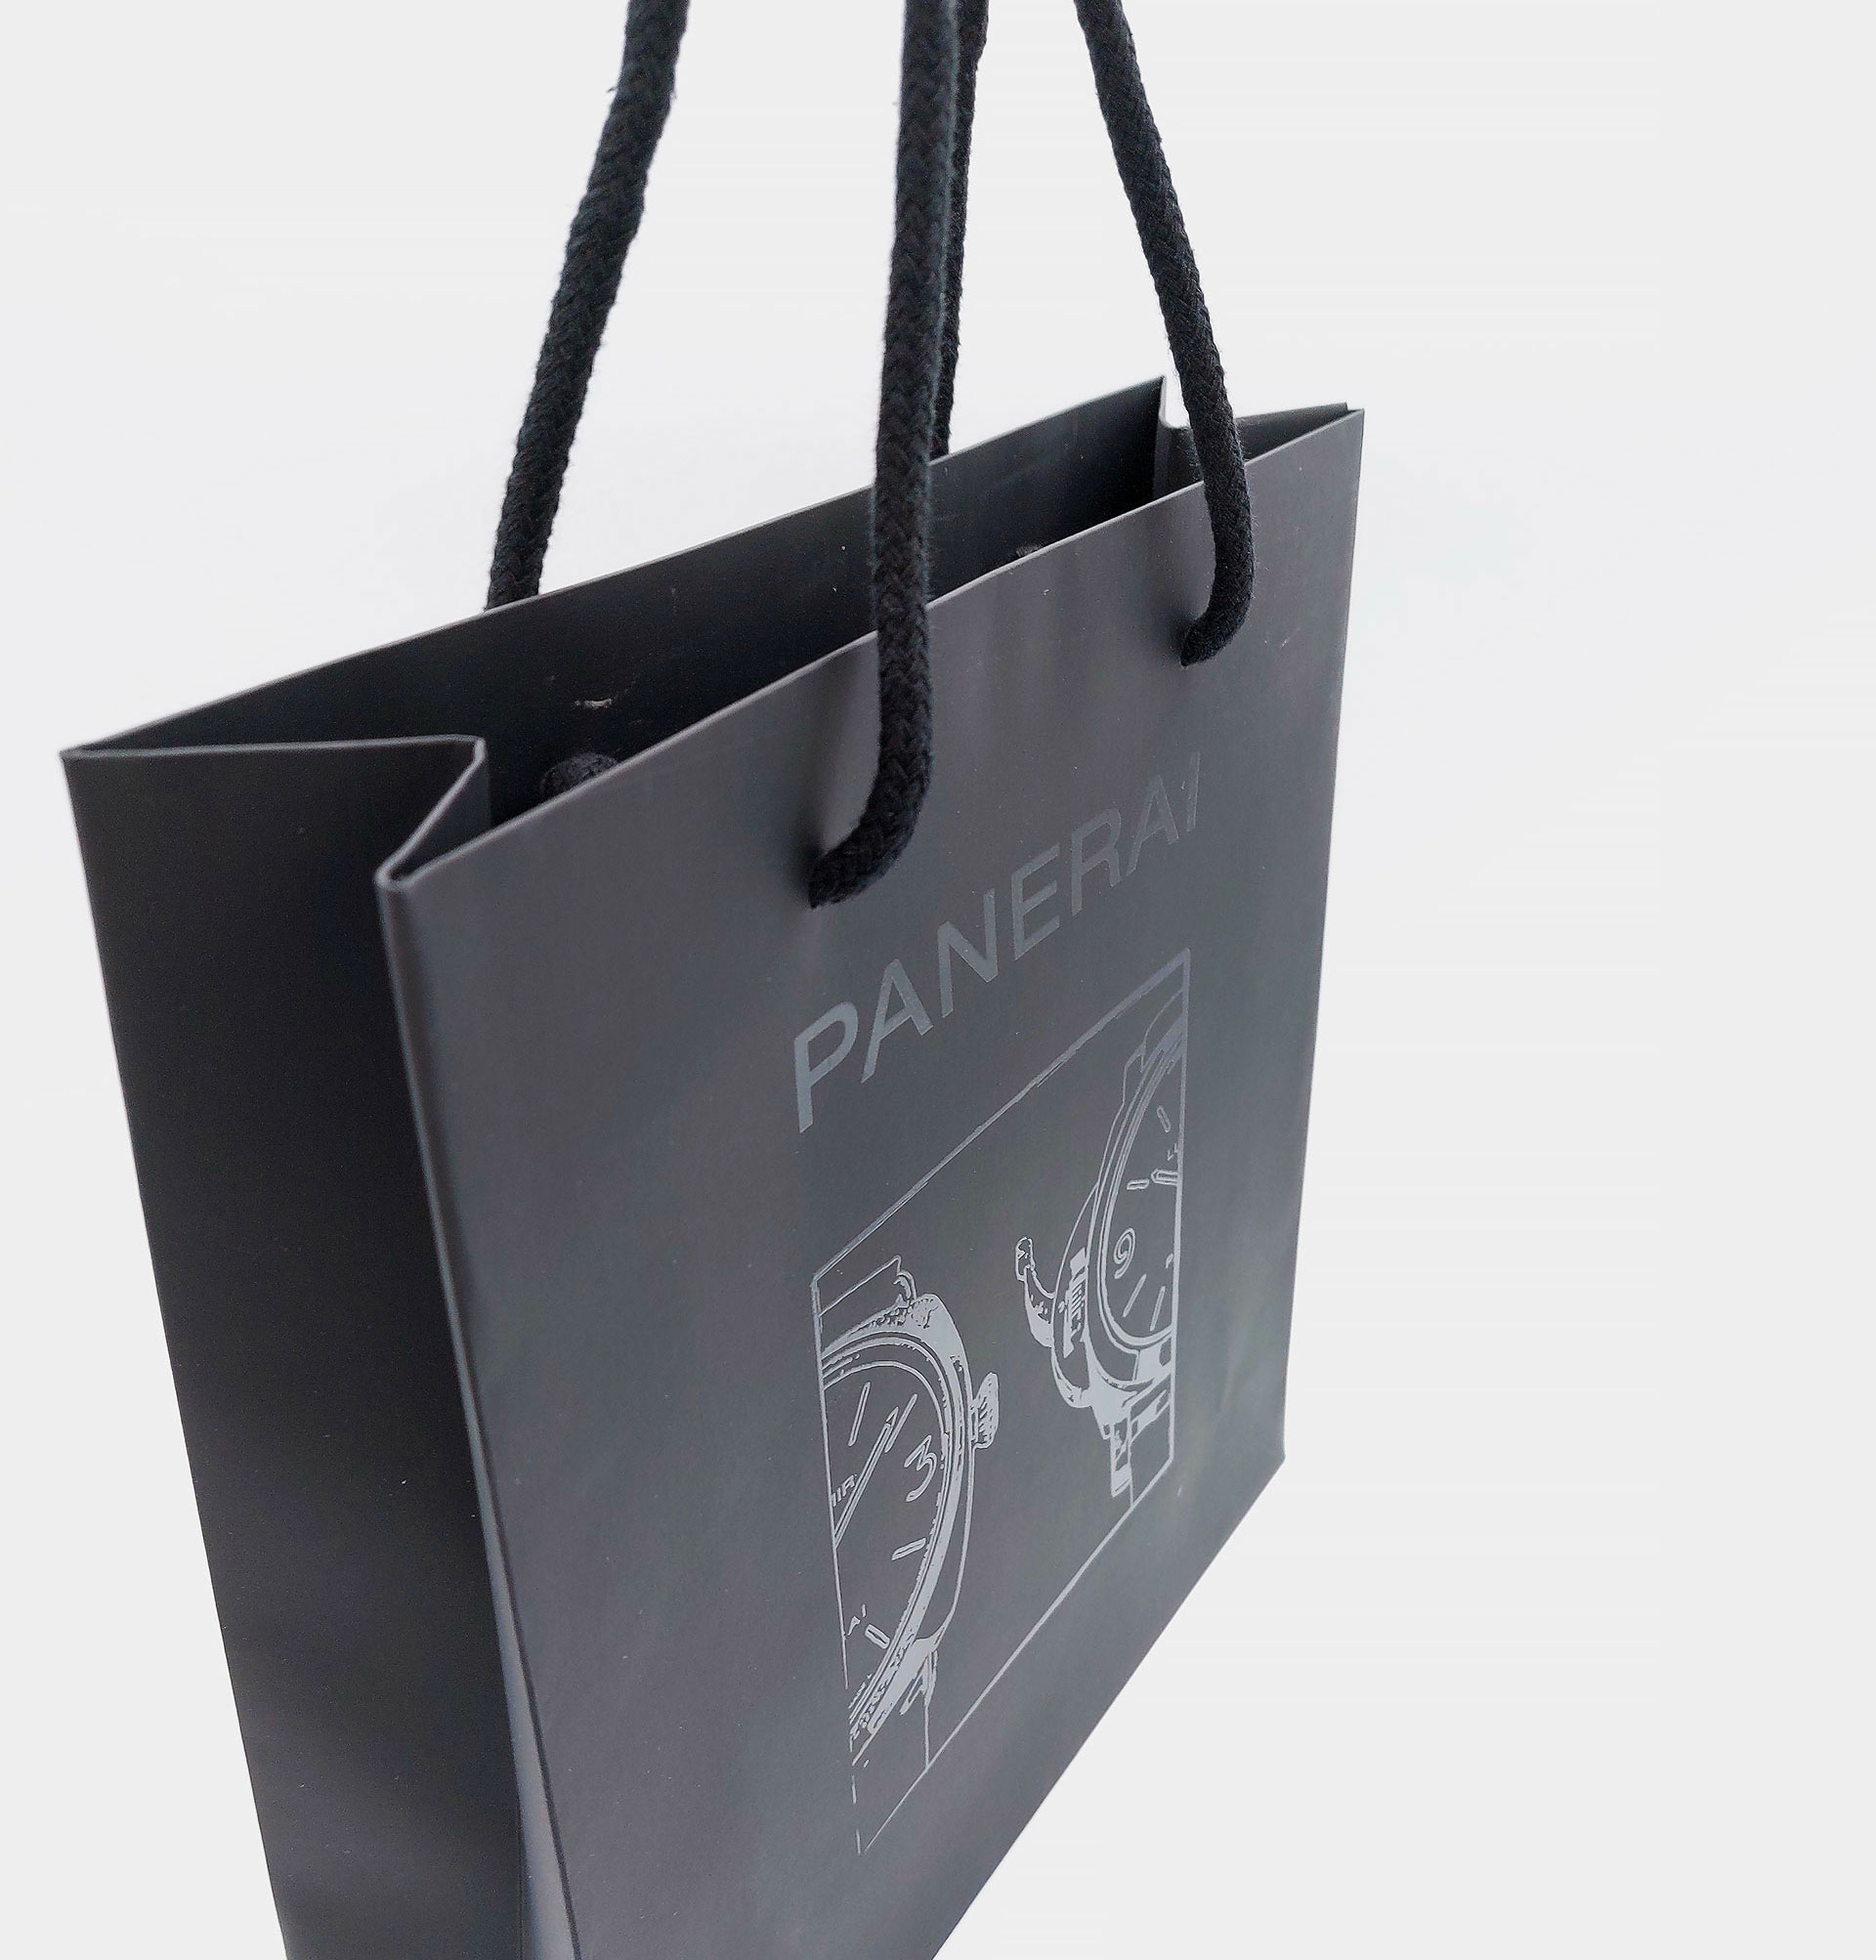 Paper luxury shopping bag Fiorini International for Panerai